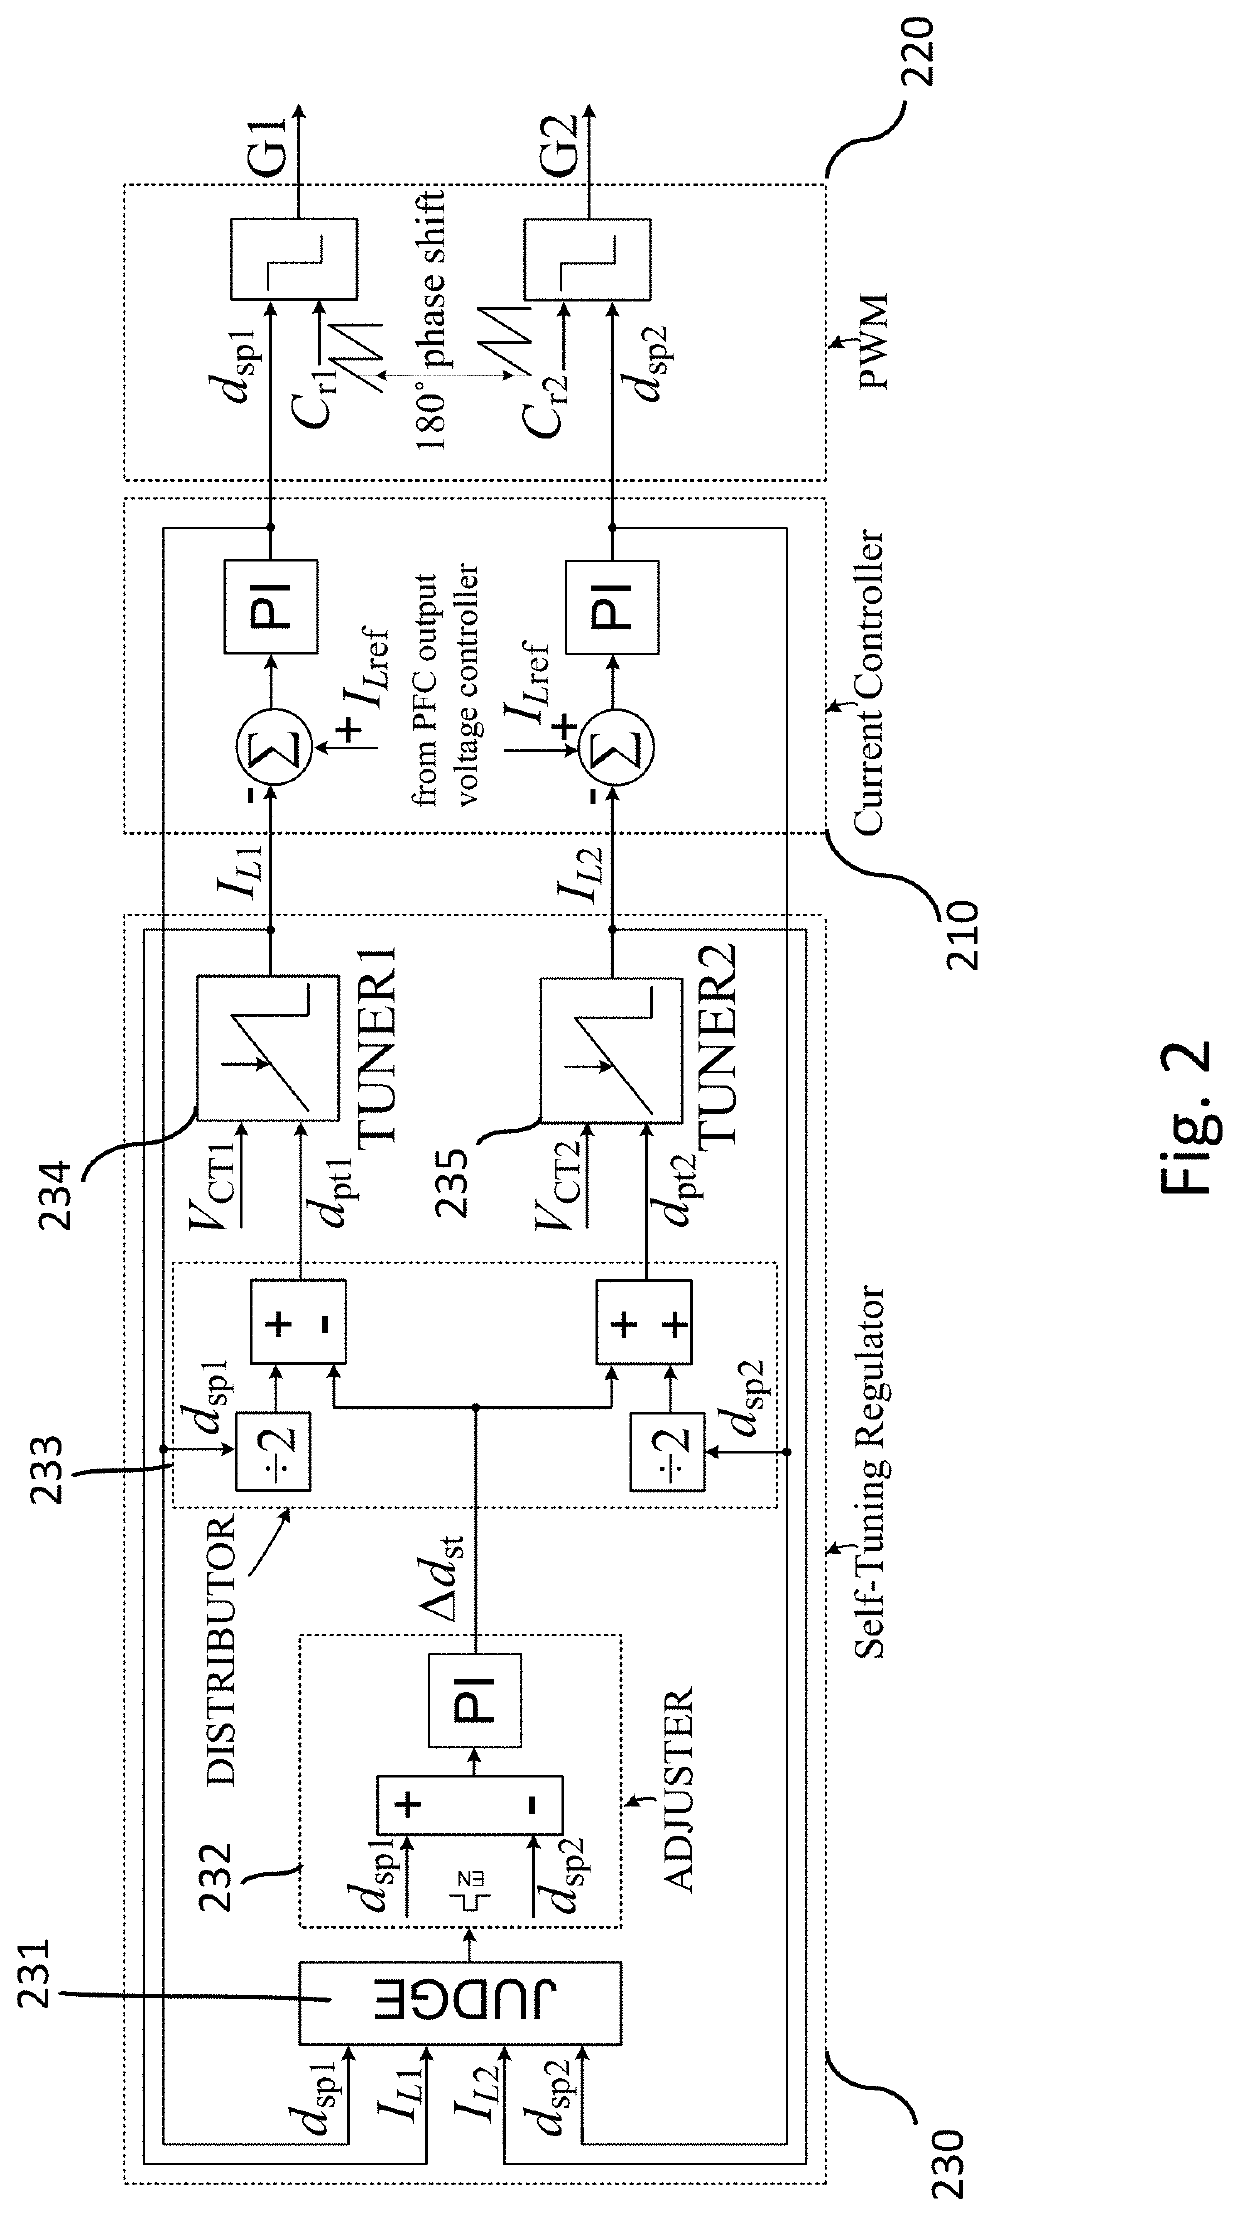 Self-tuning regulator for interleaved power factor correction circuits and method of self-tuning regulation